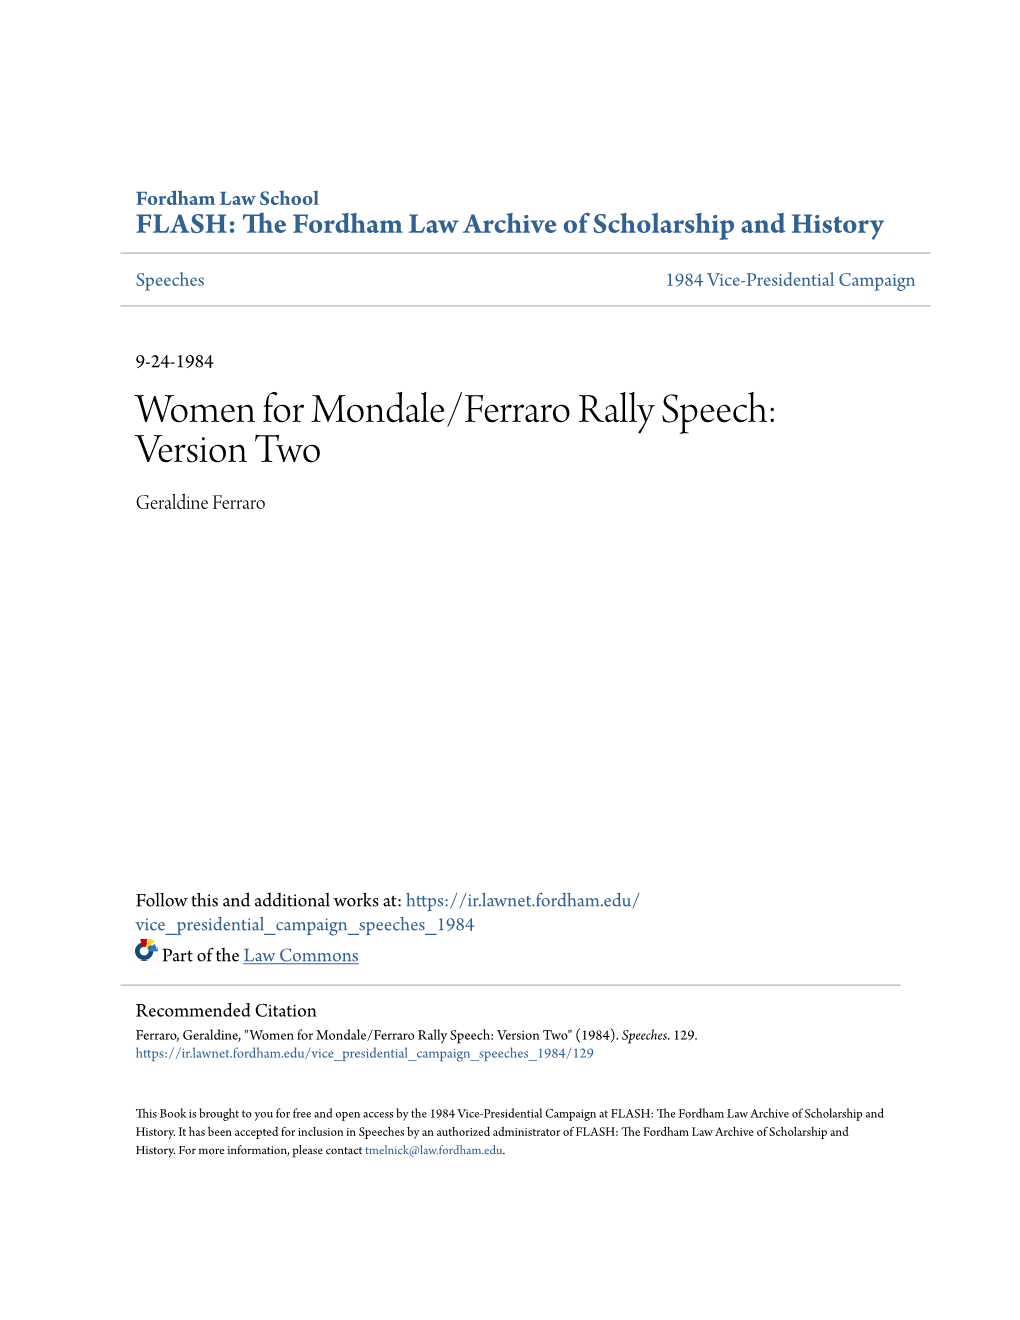 Women for Mondale/Ferraro Rally Speech: Version Two Geraldine Ferraro